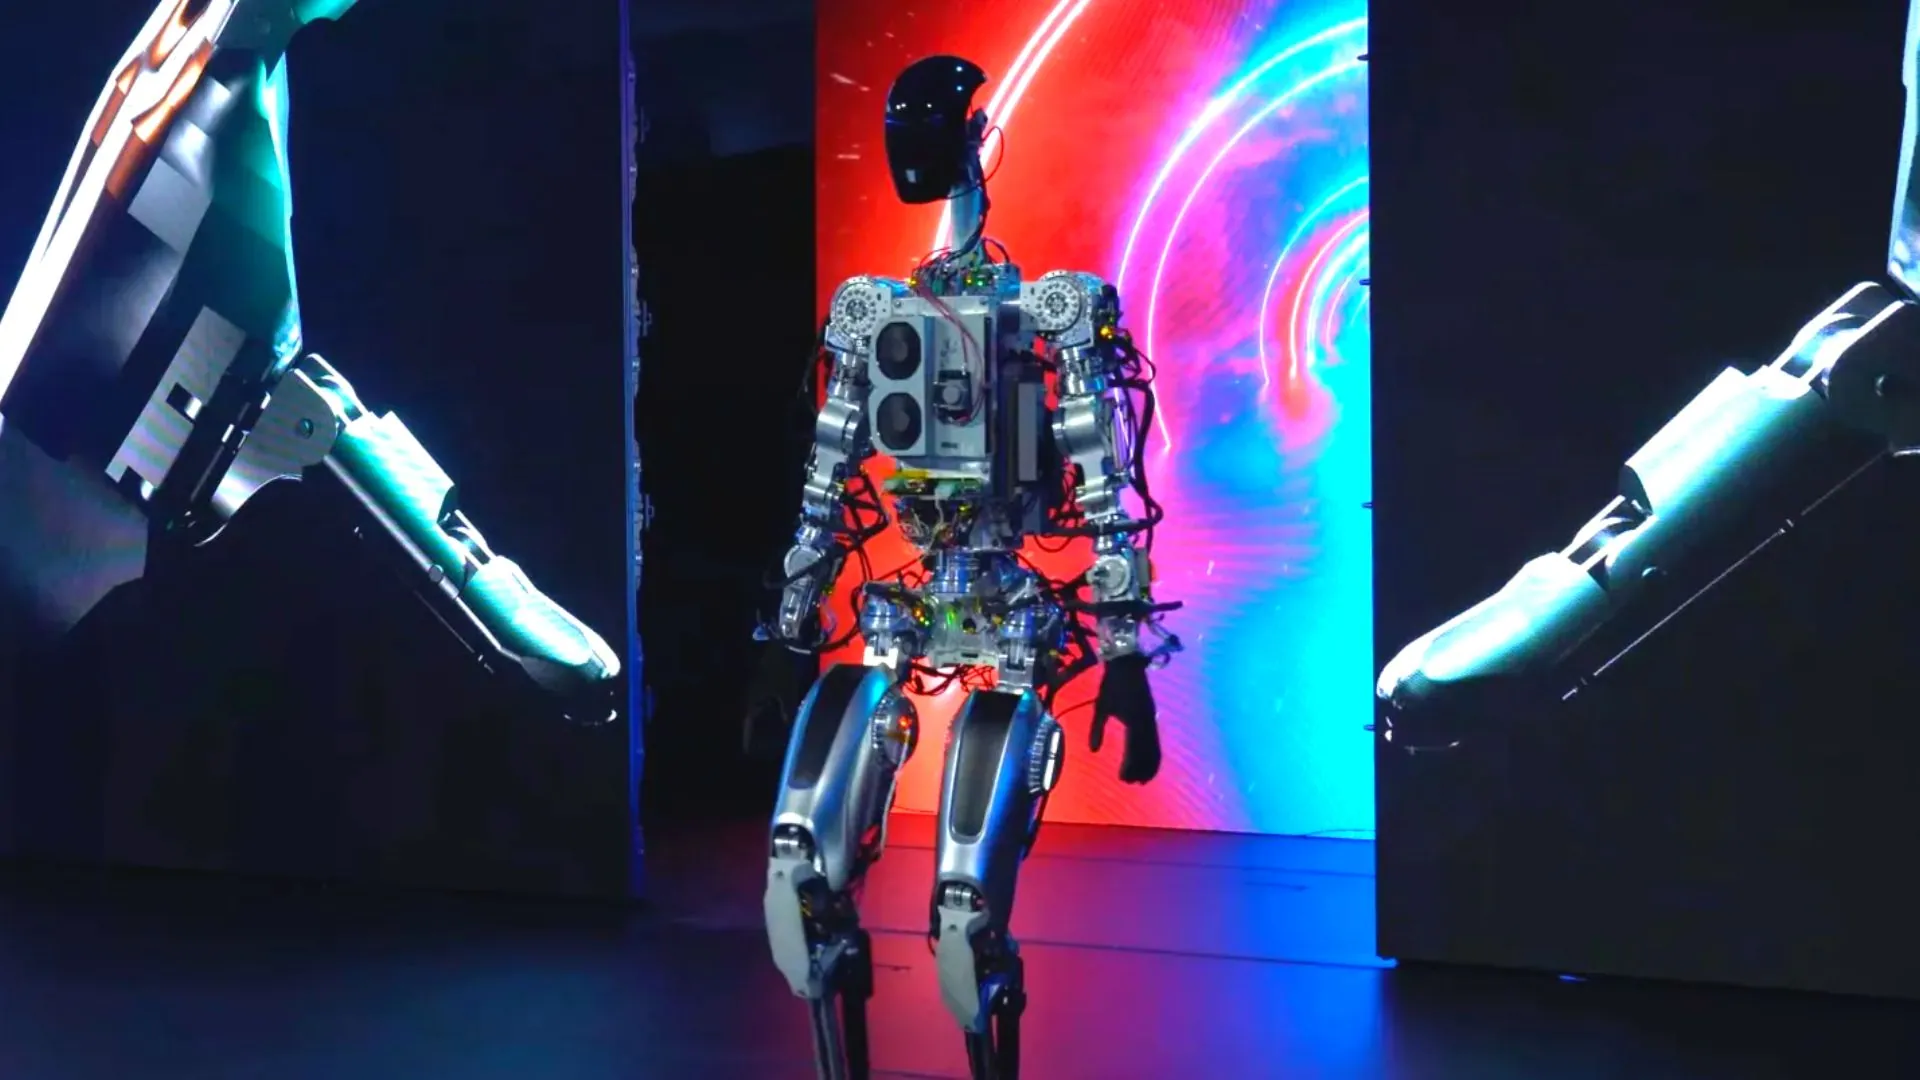 Elon Musk Tesla Robots: What Robotics Experts Think